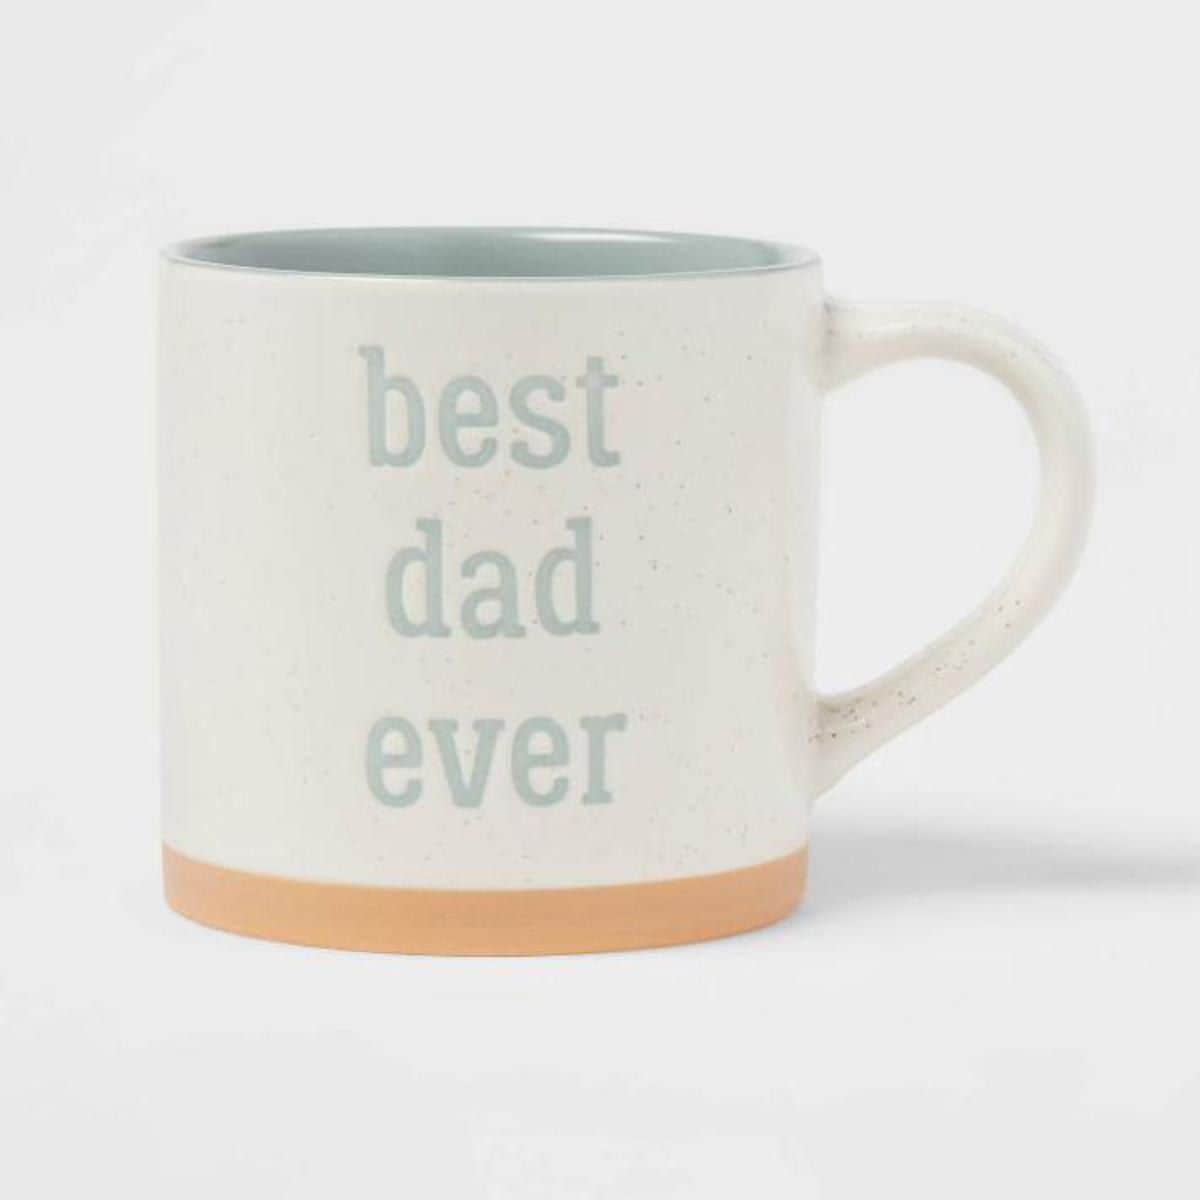 Best dad mug at Target